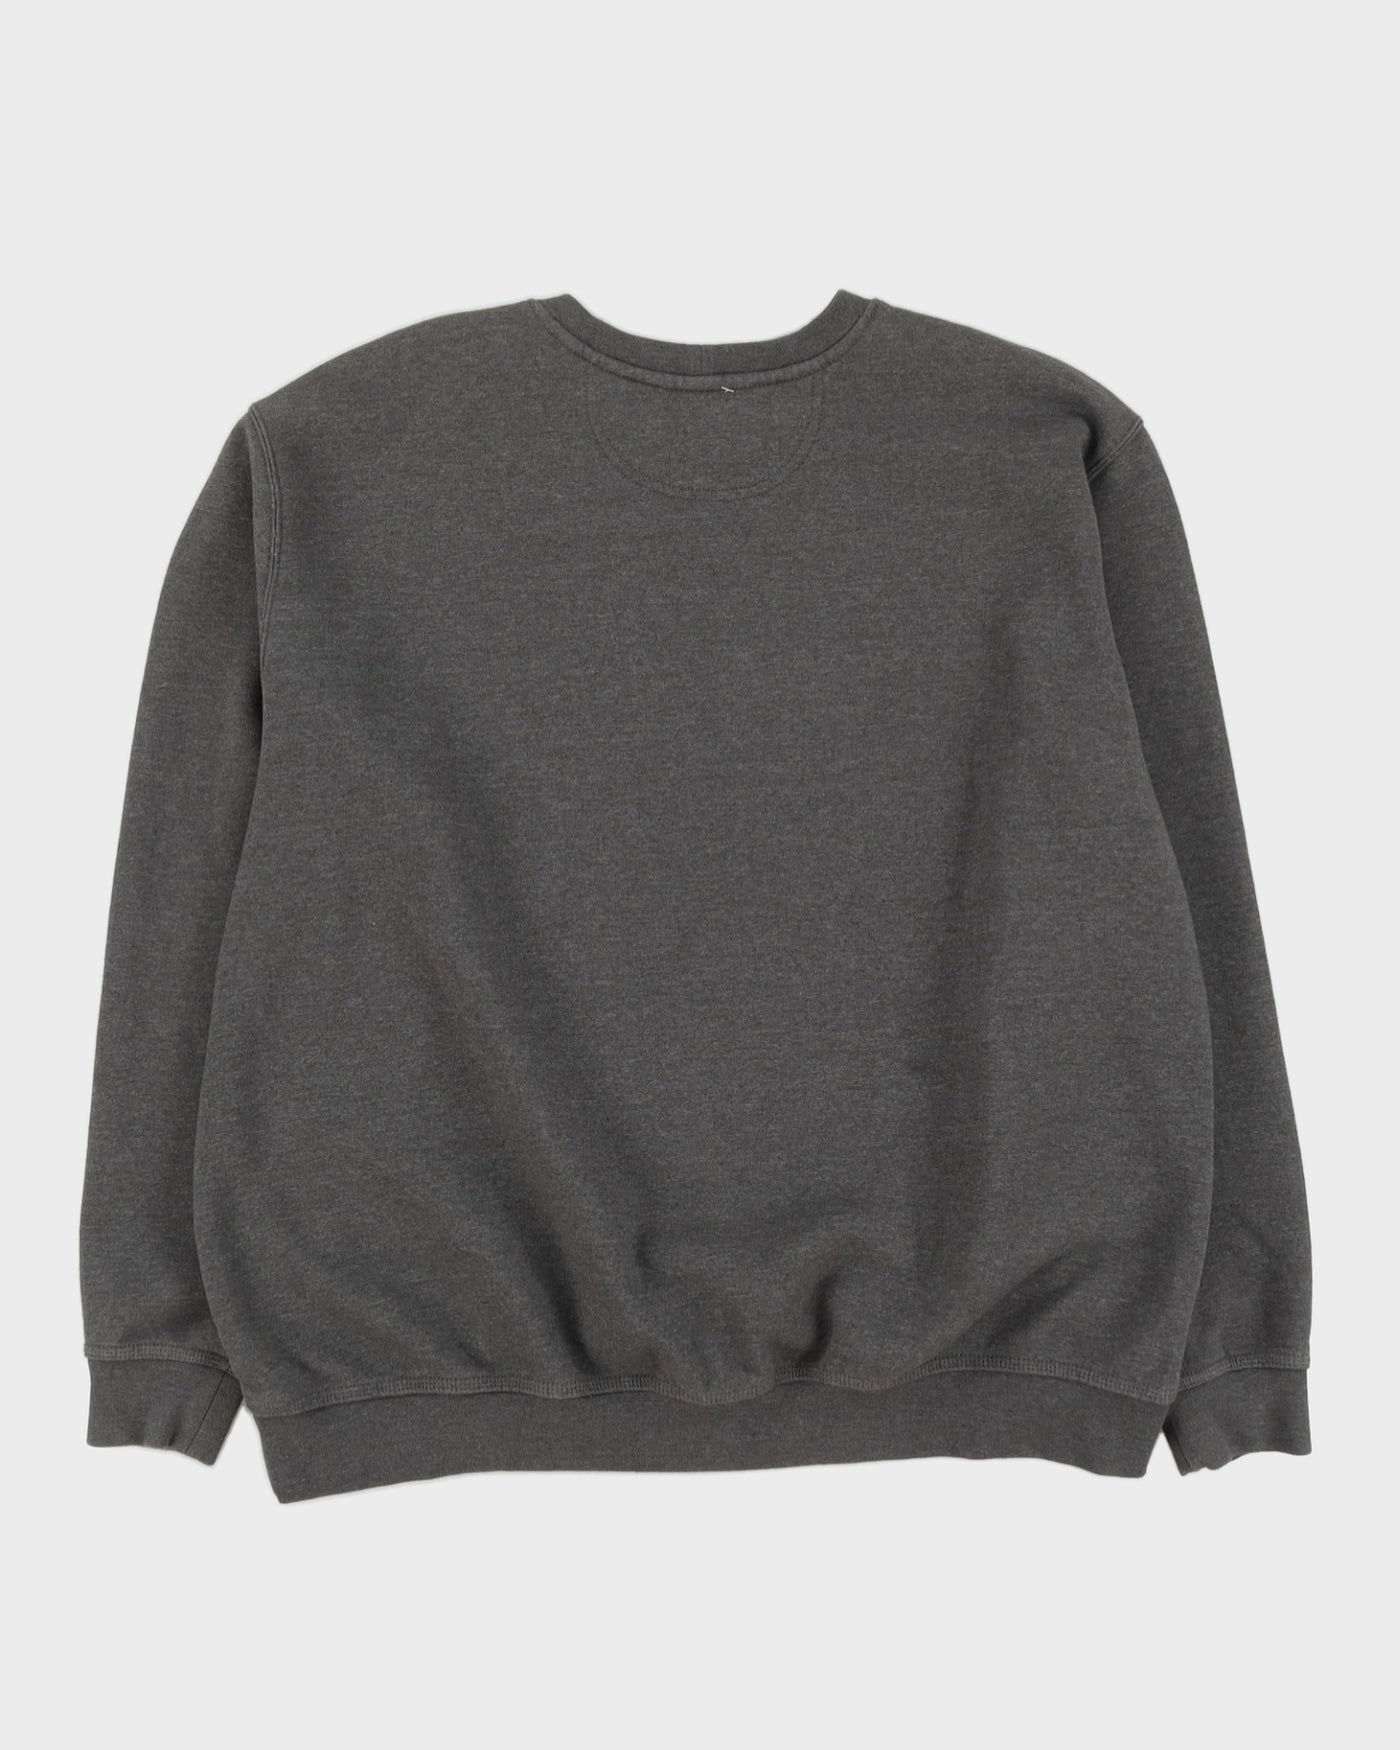 Carhartt Grey Sweatshirt - XXL